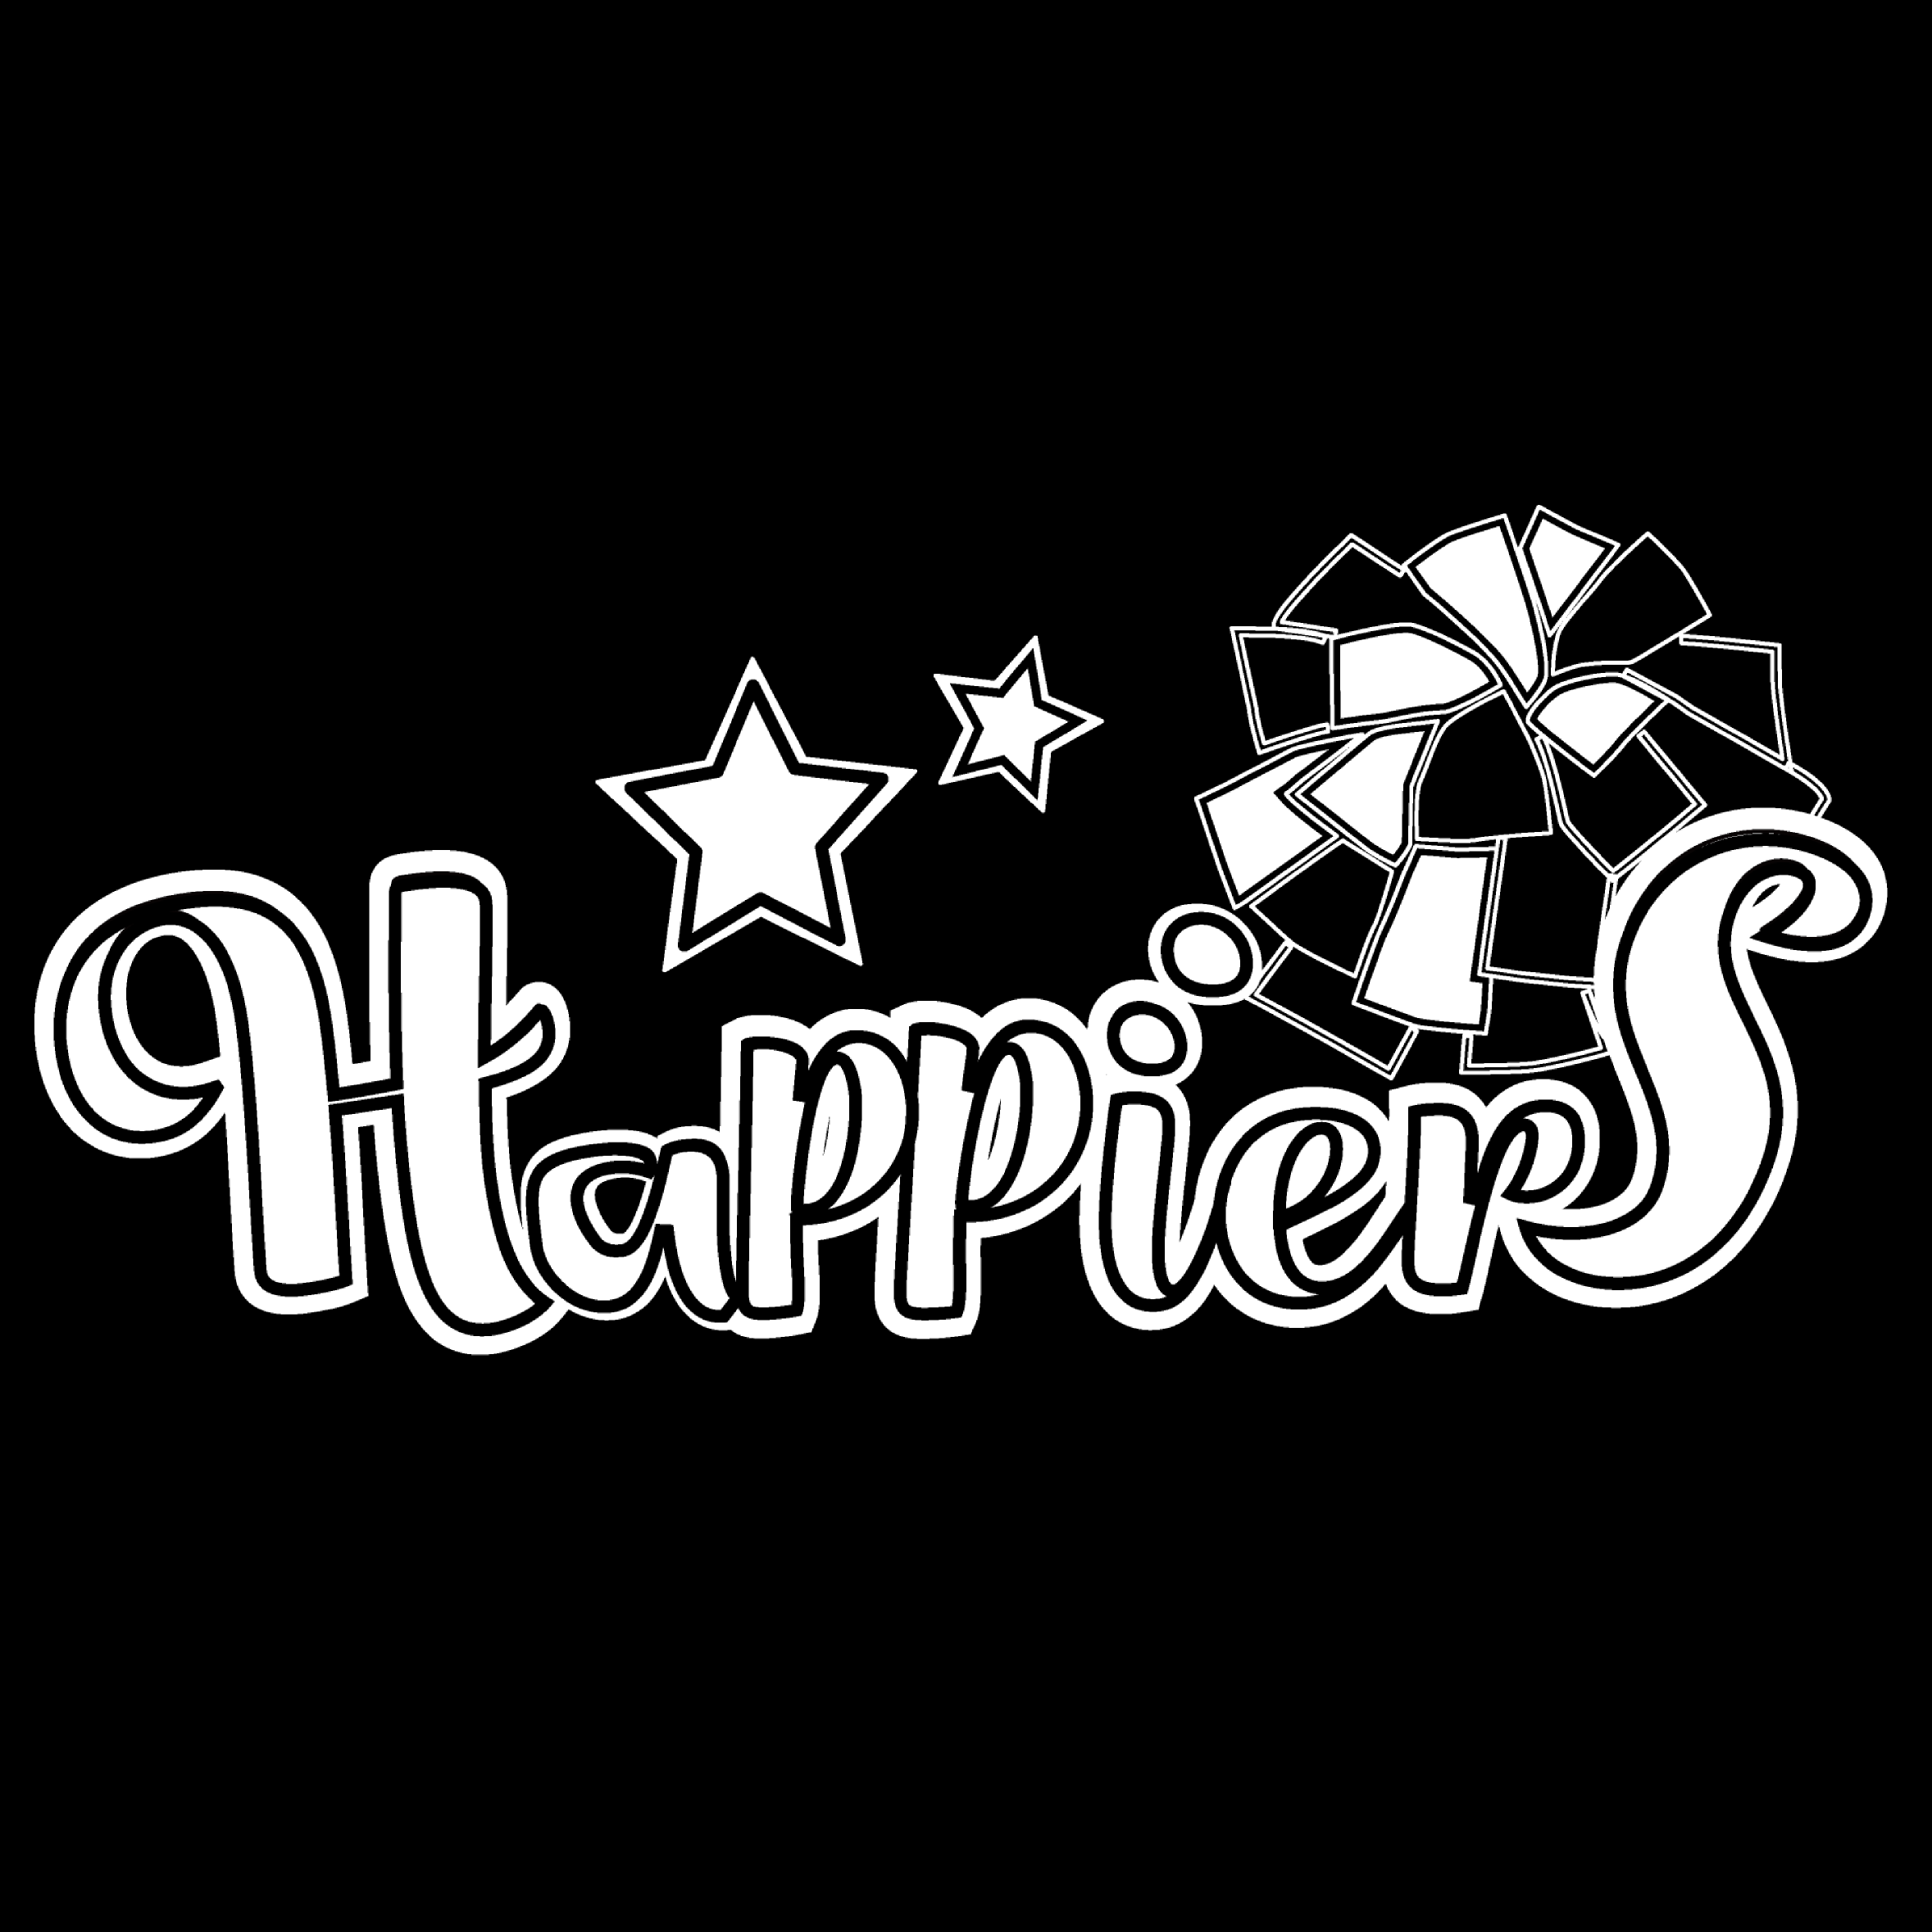 happiers2021